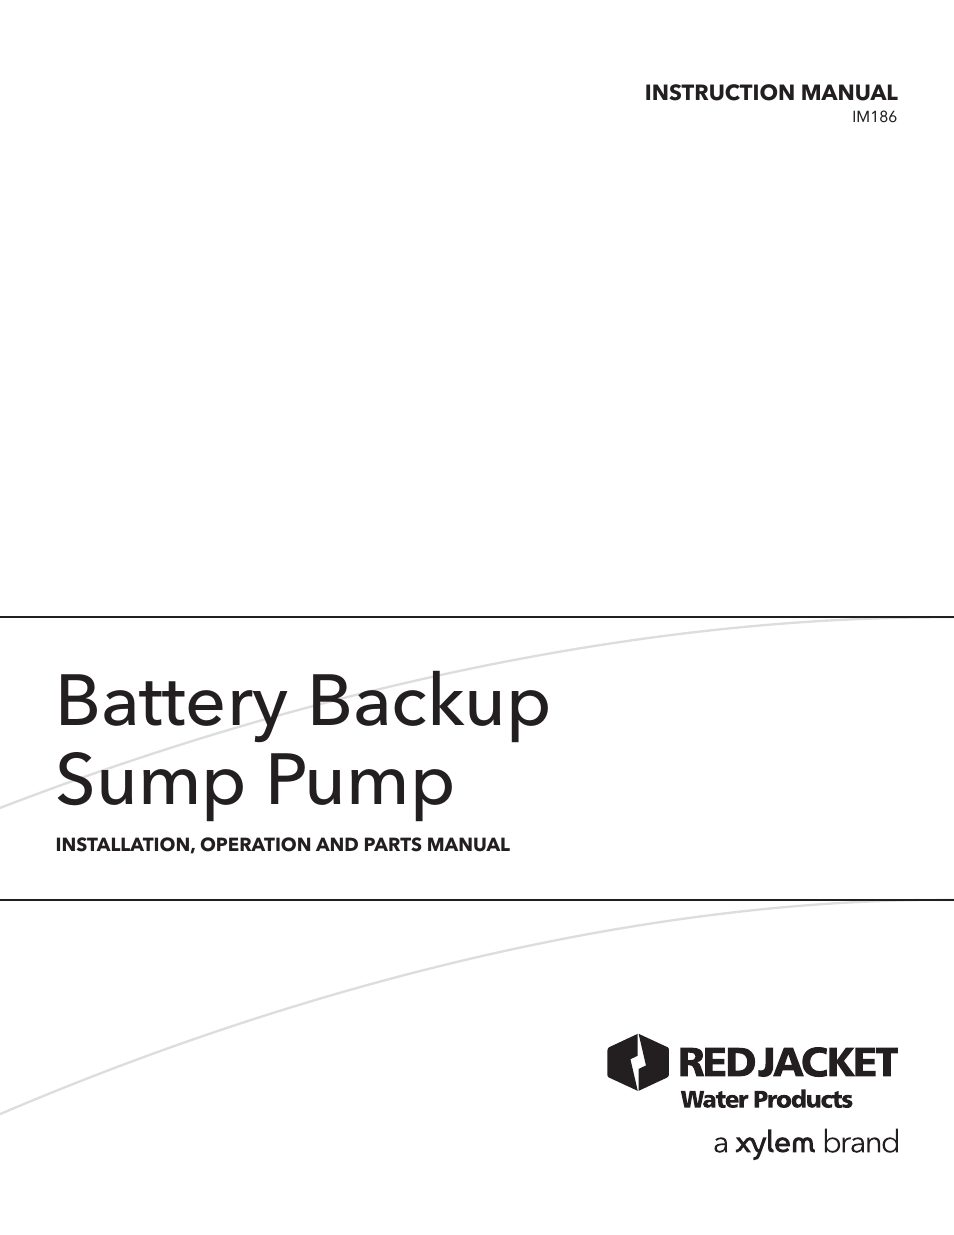 IM186R03 Battery Backup Sump Pump